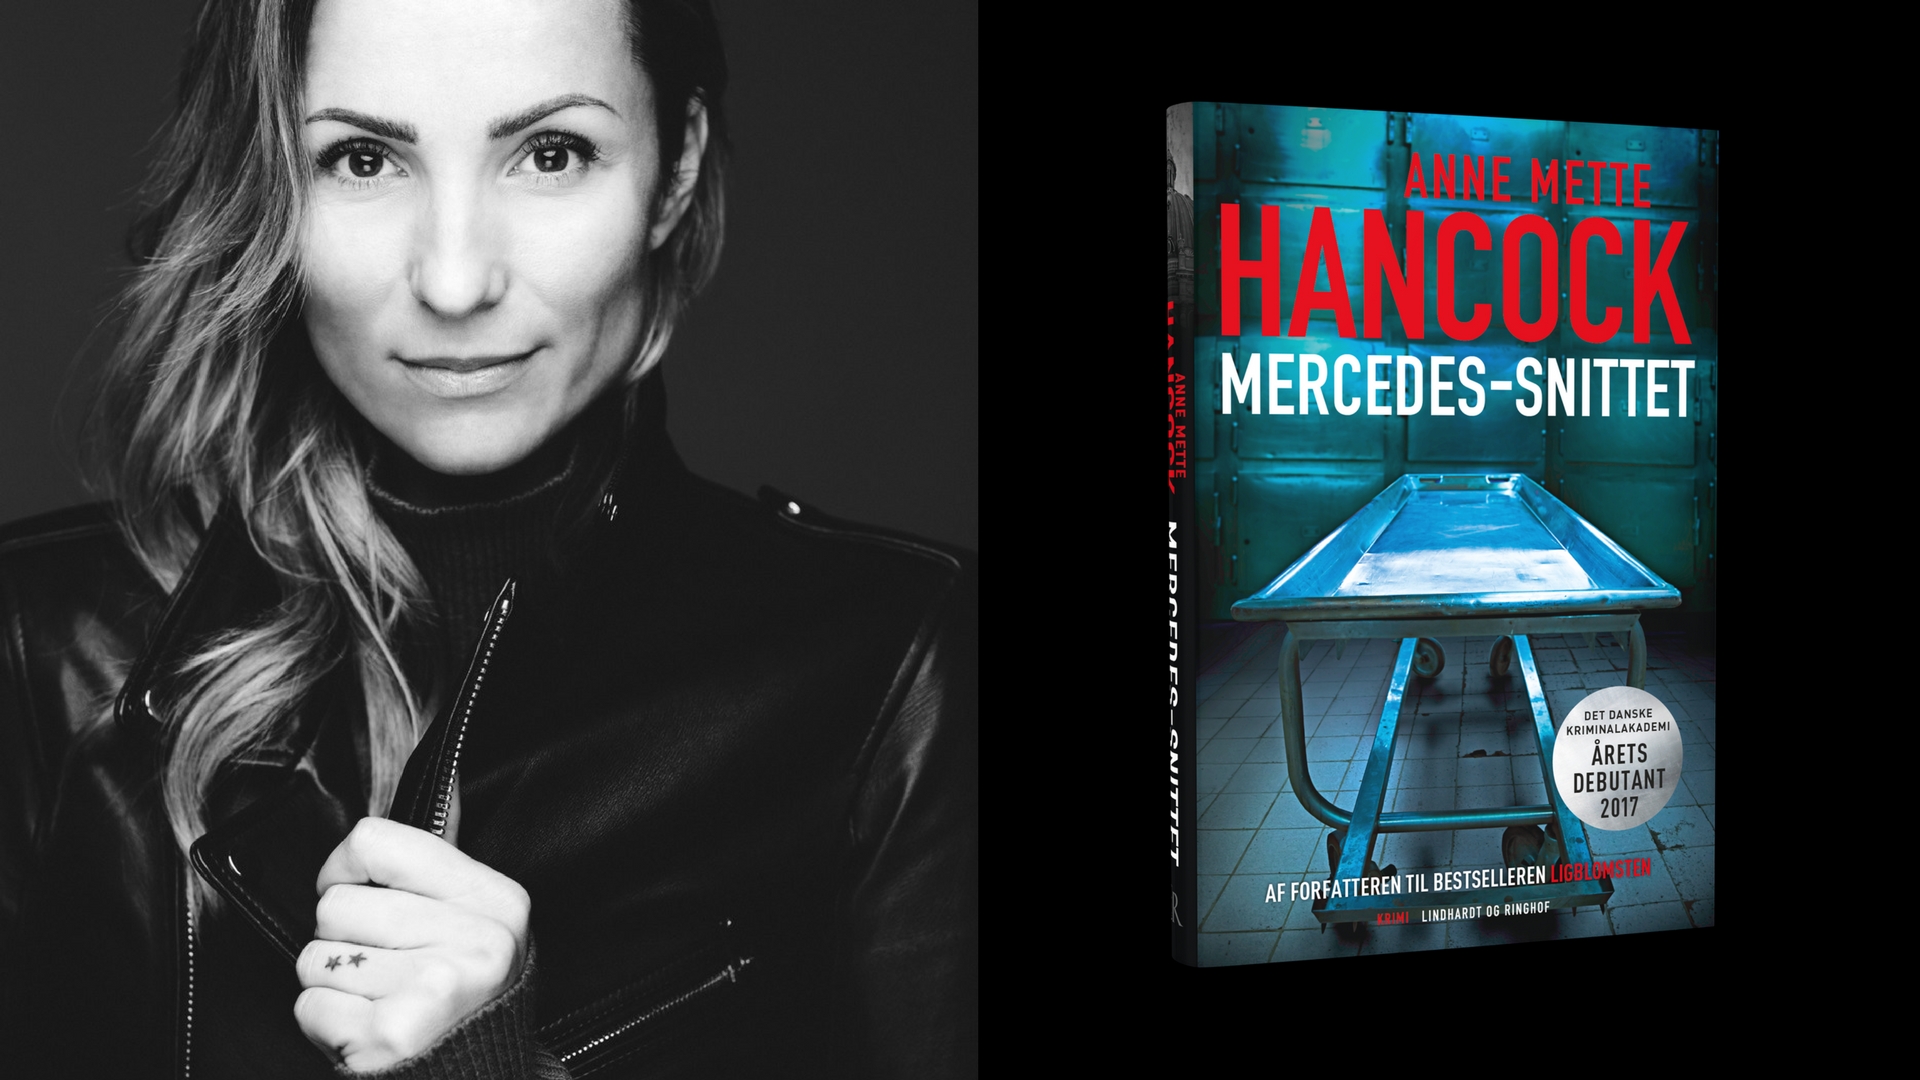 Mercedes-snittet, Anne Mette Hancock